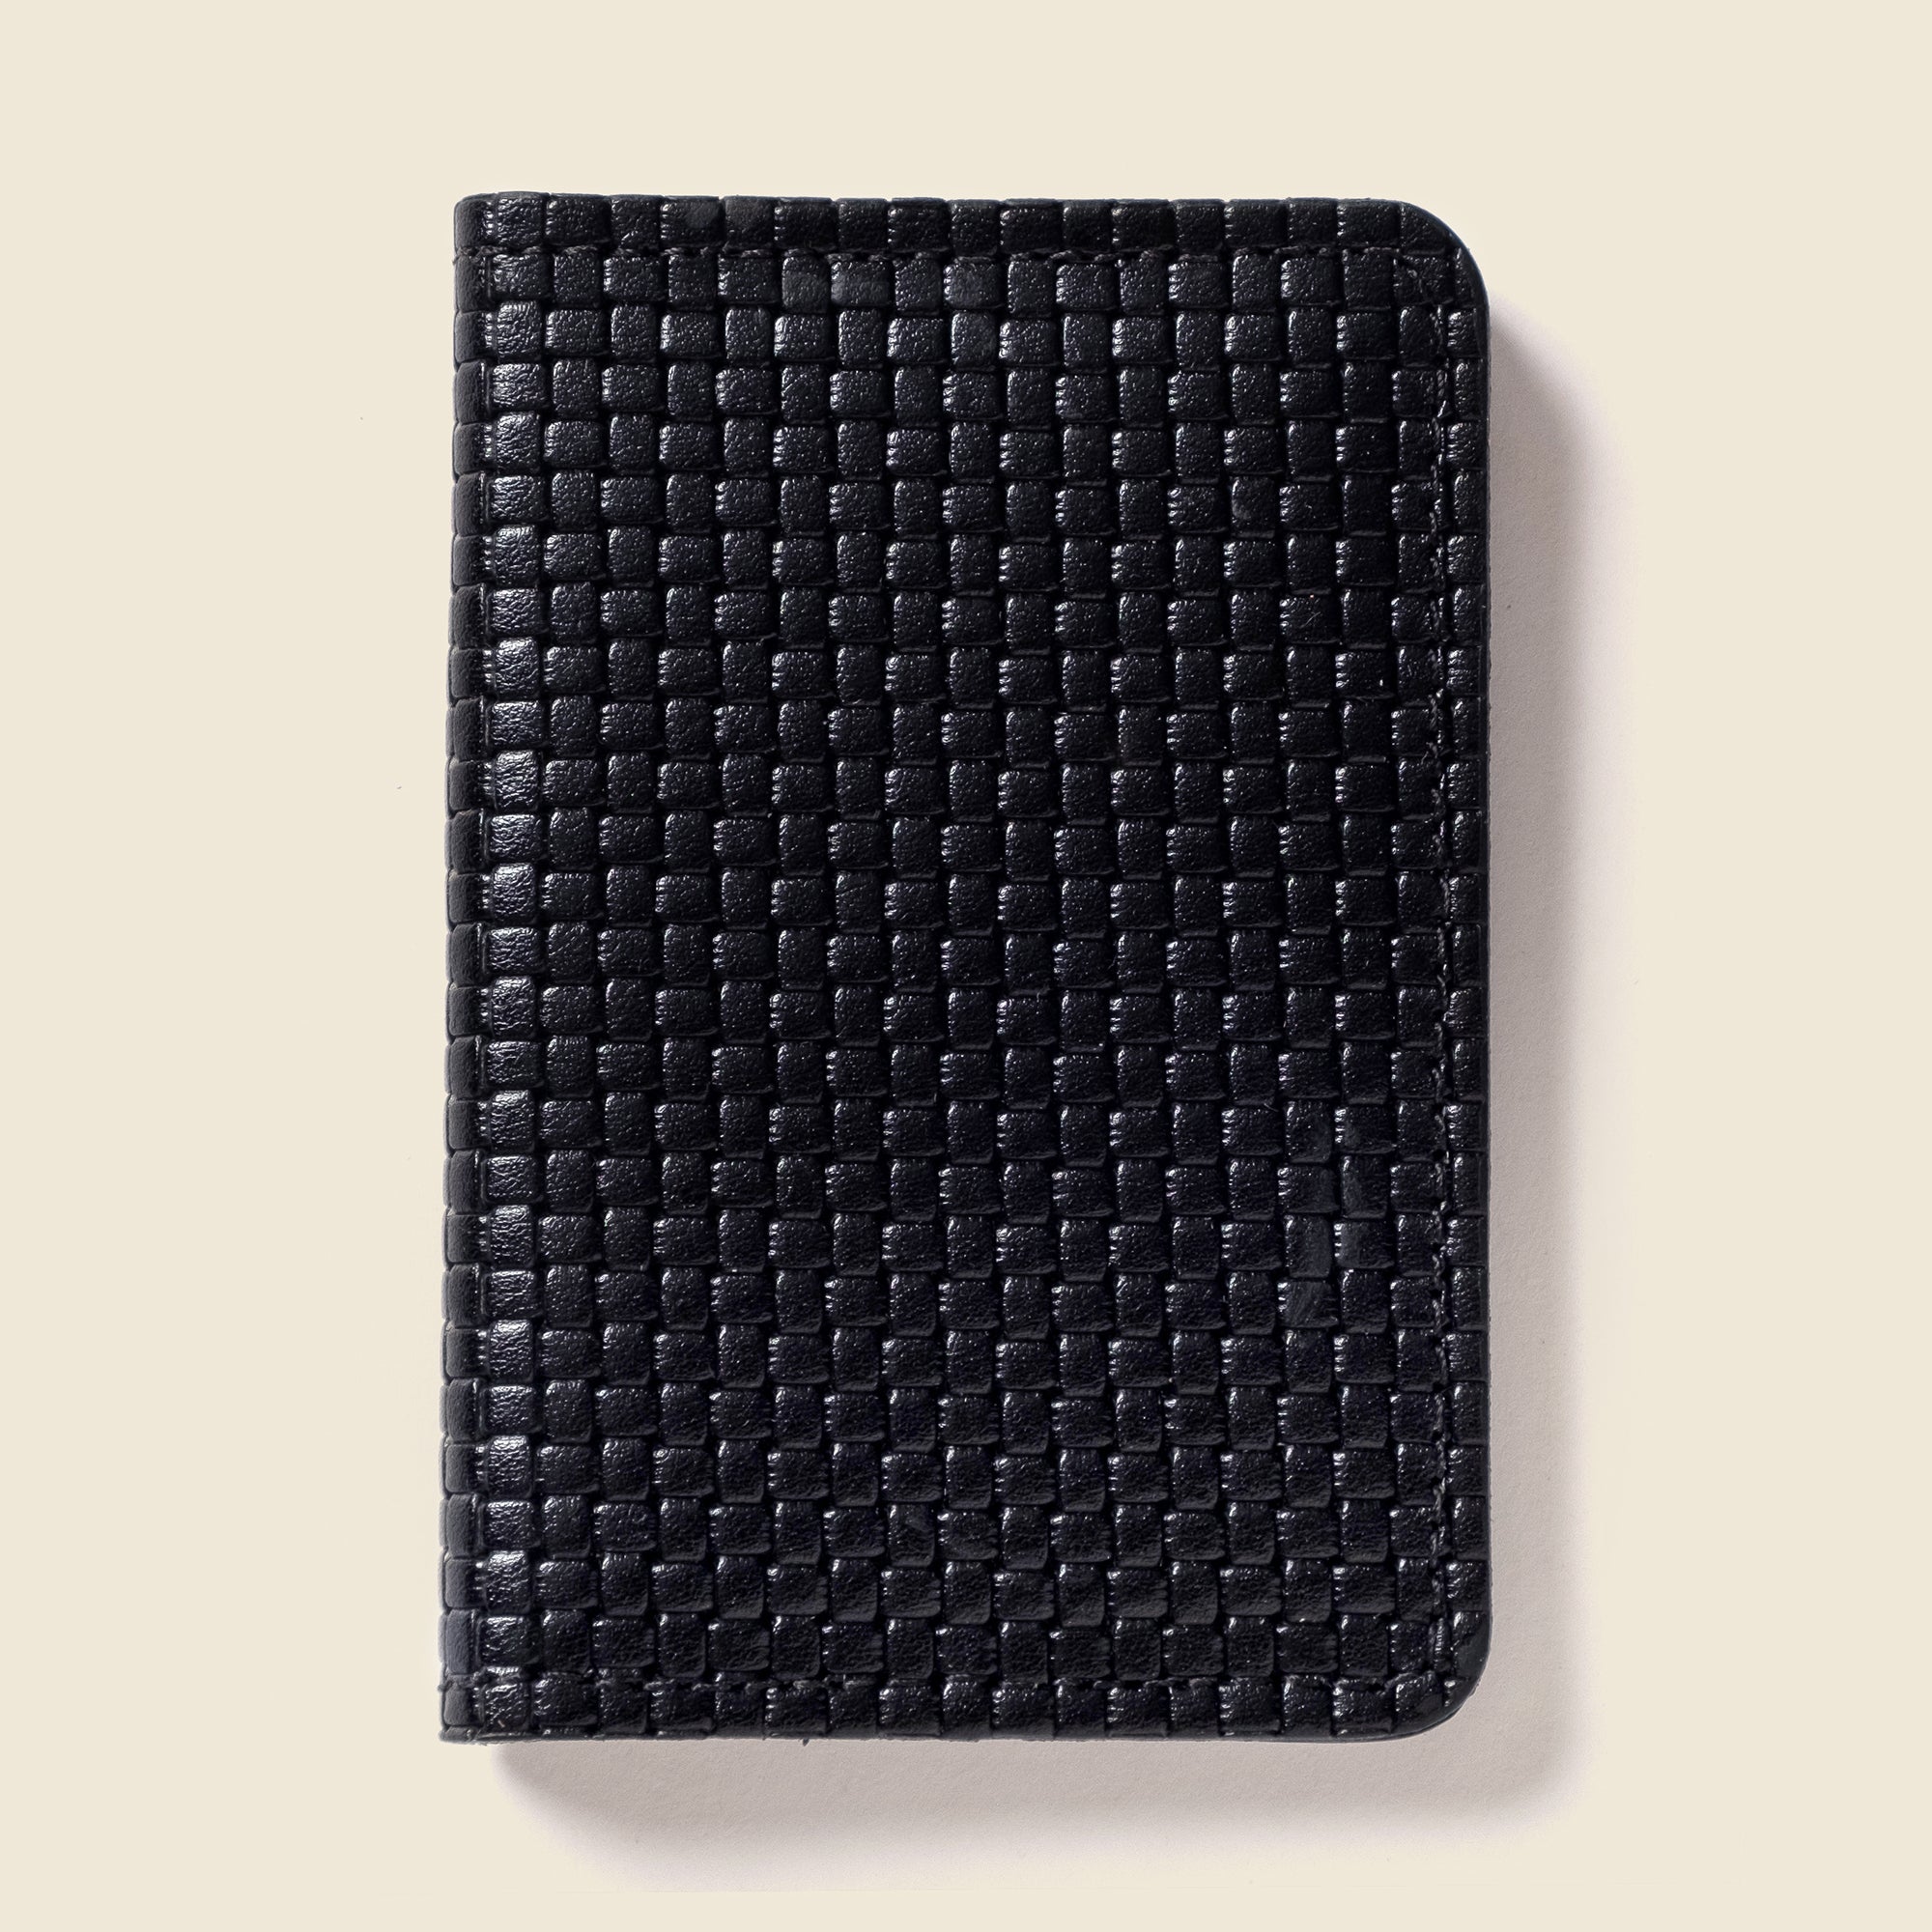 Black leather gift ideas for men